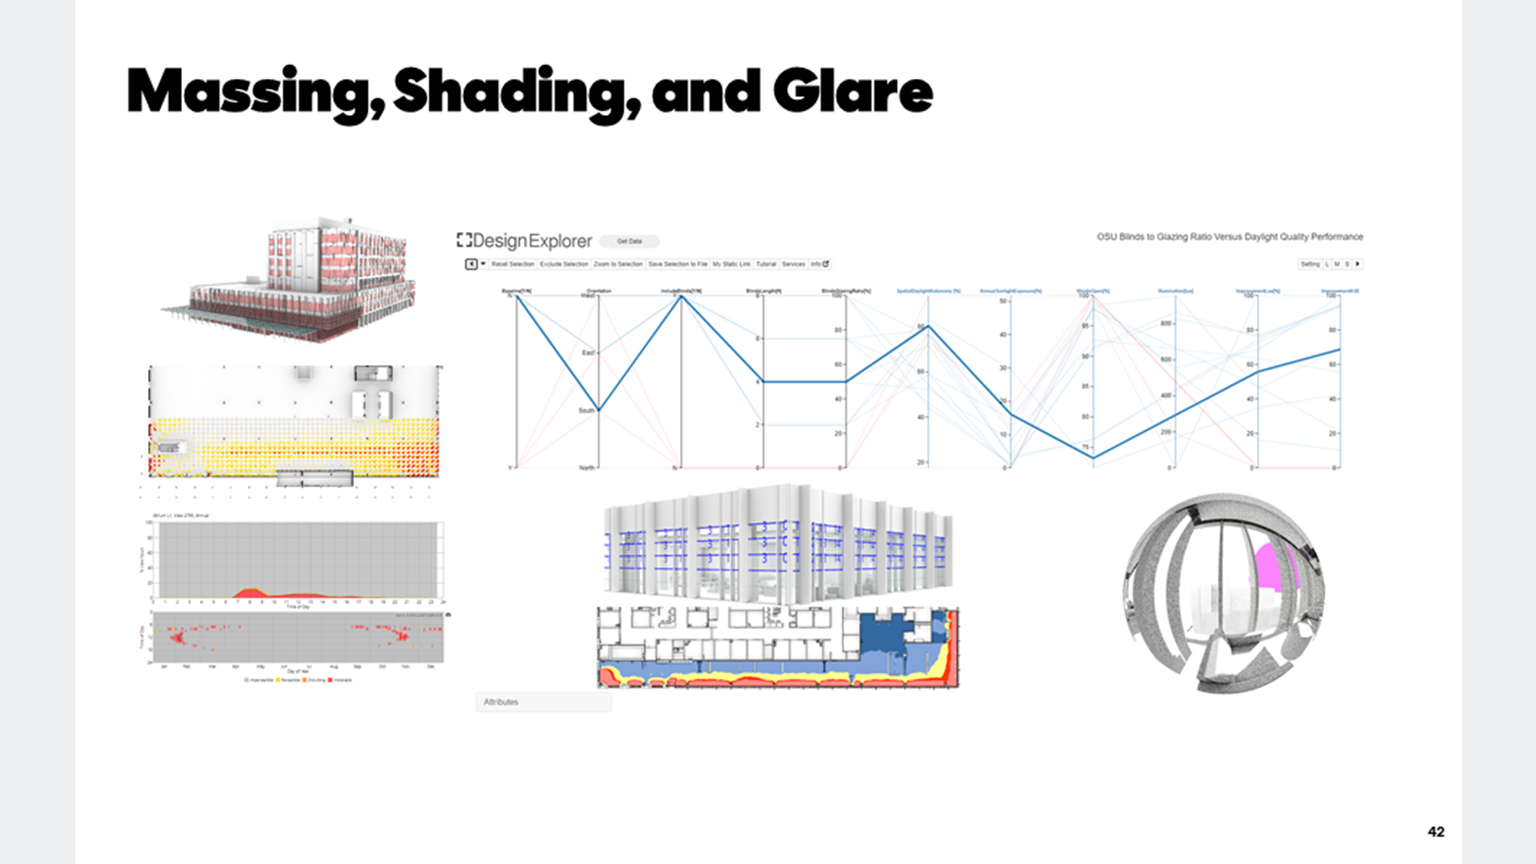 Massing, Shading, and Glare diagrams.